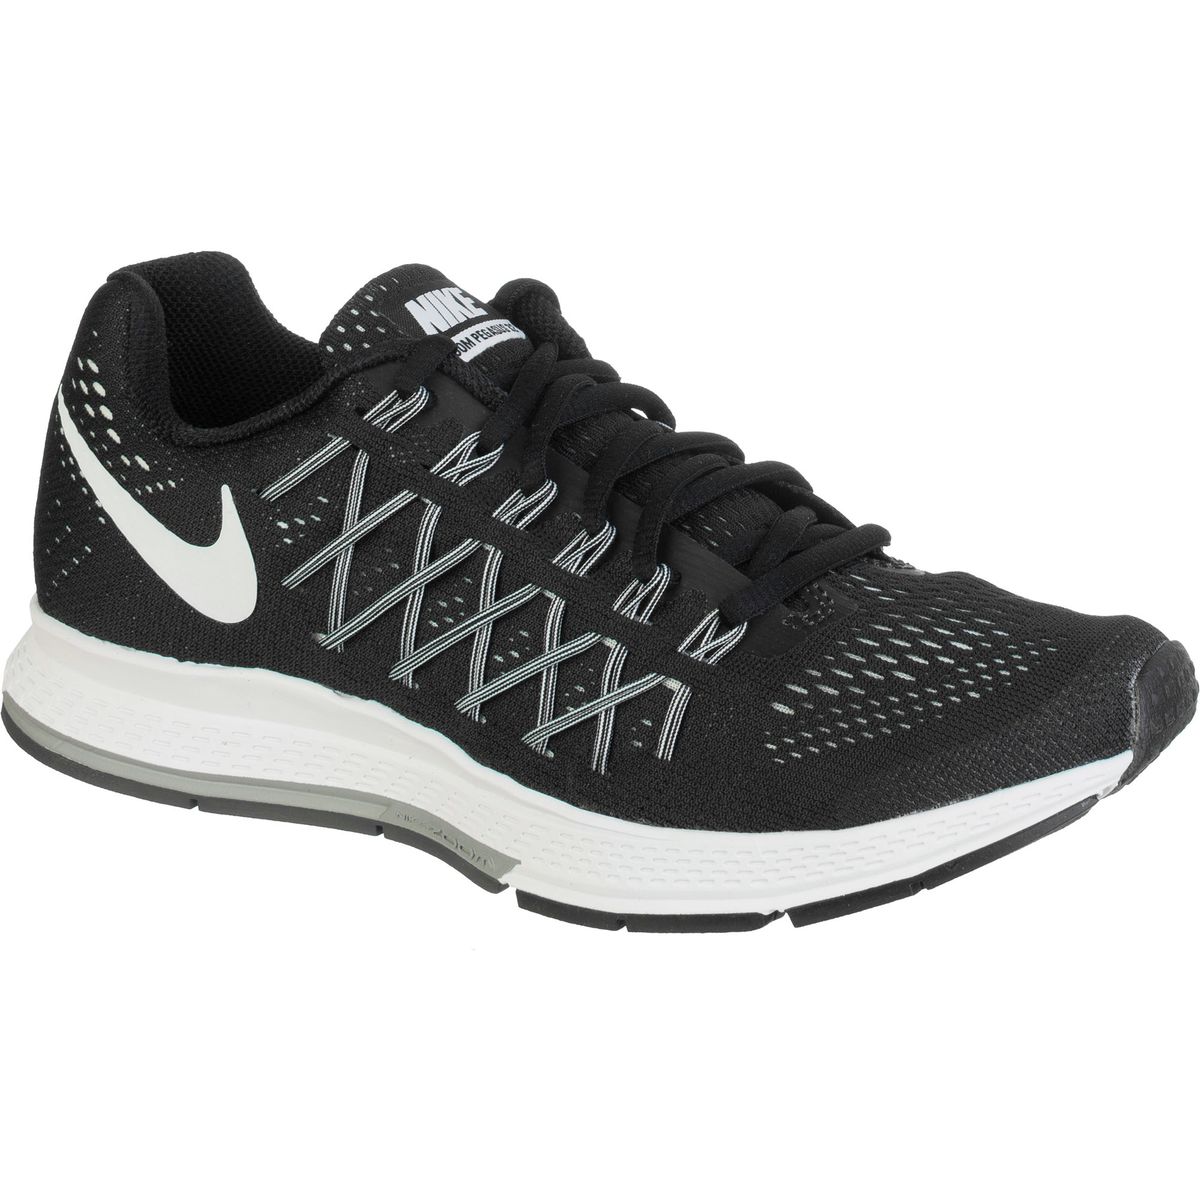 Nike Air Zoom Pegasus 32 Running Shoe - Women's - Footwear